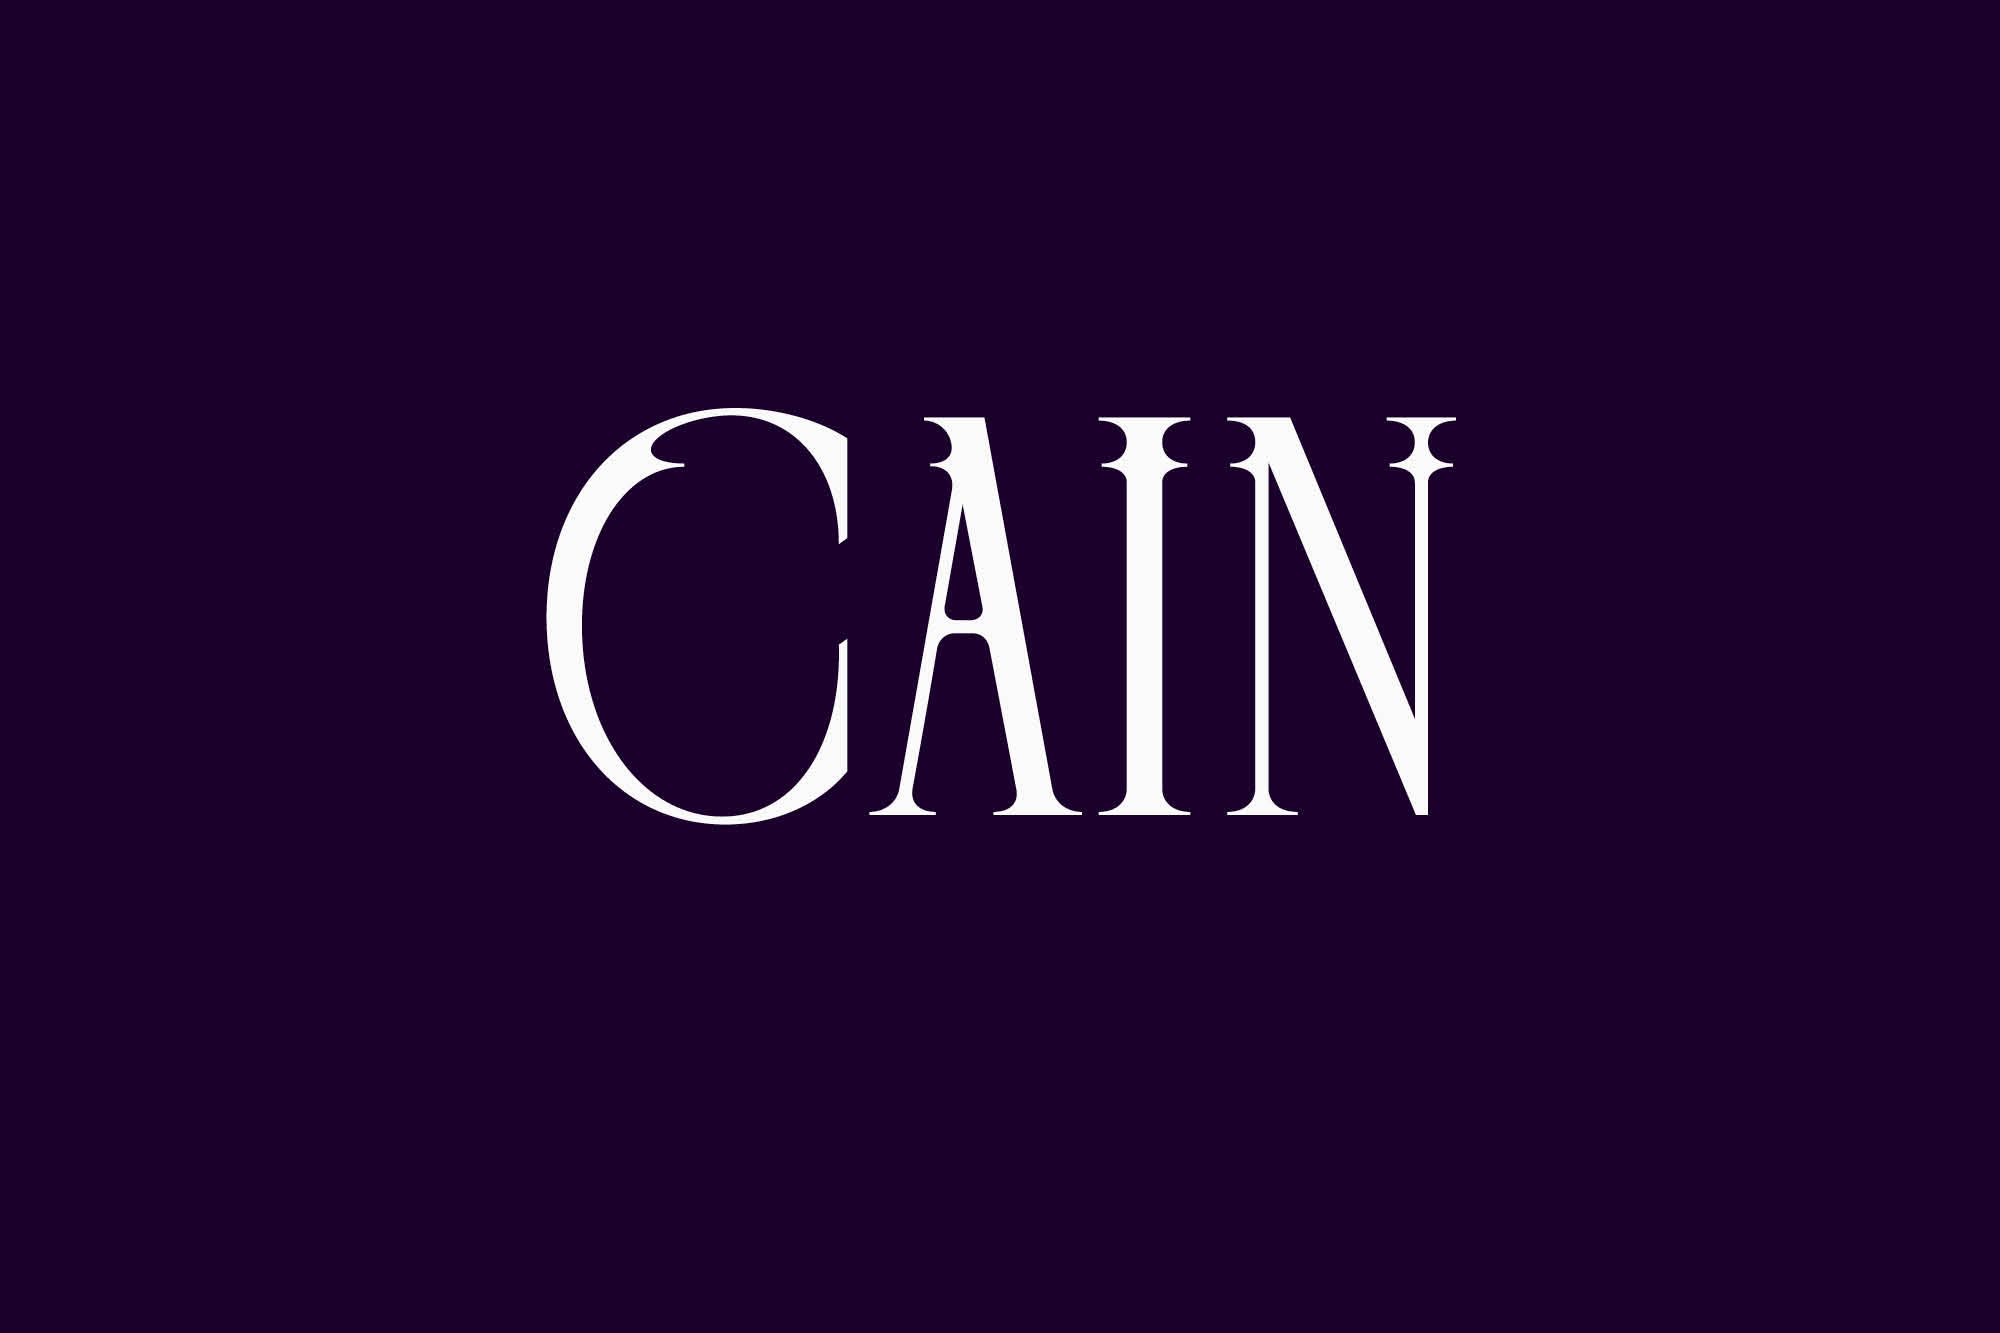 Cain Display Typeface